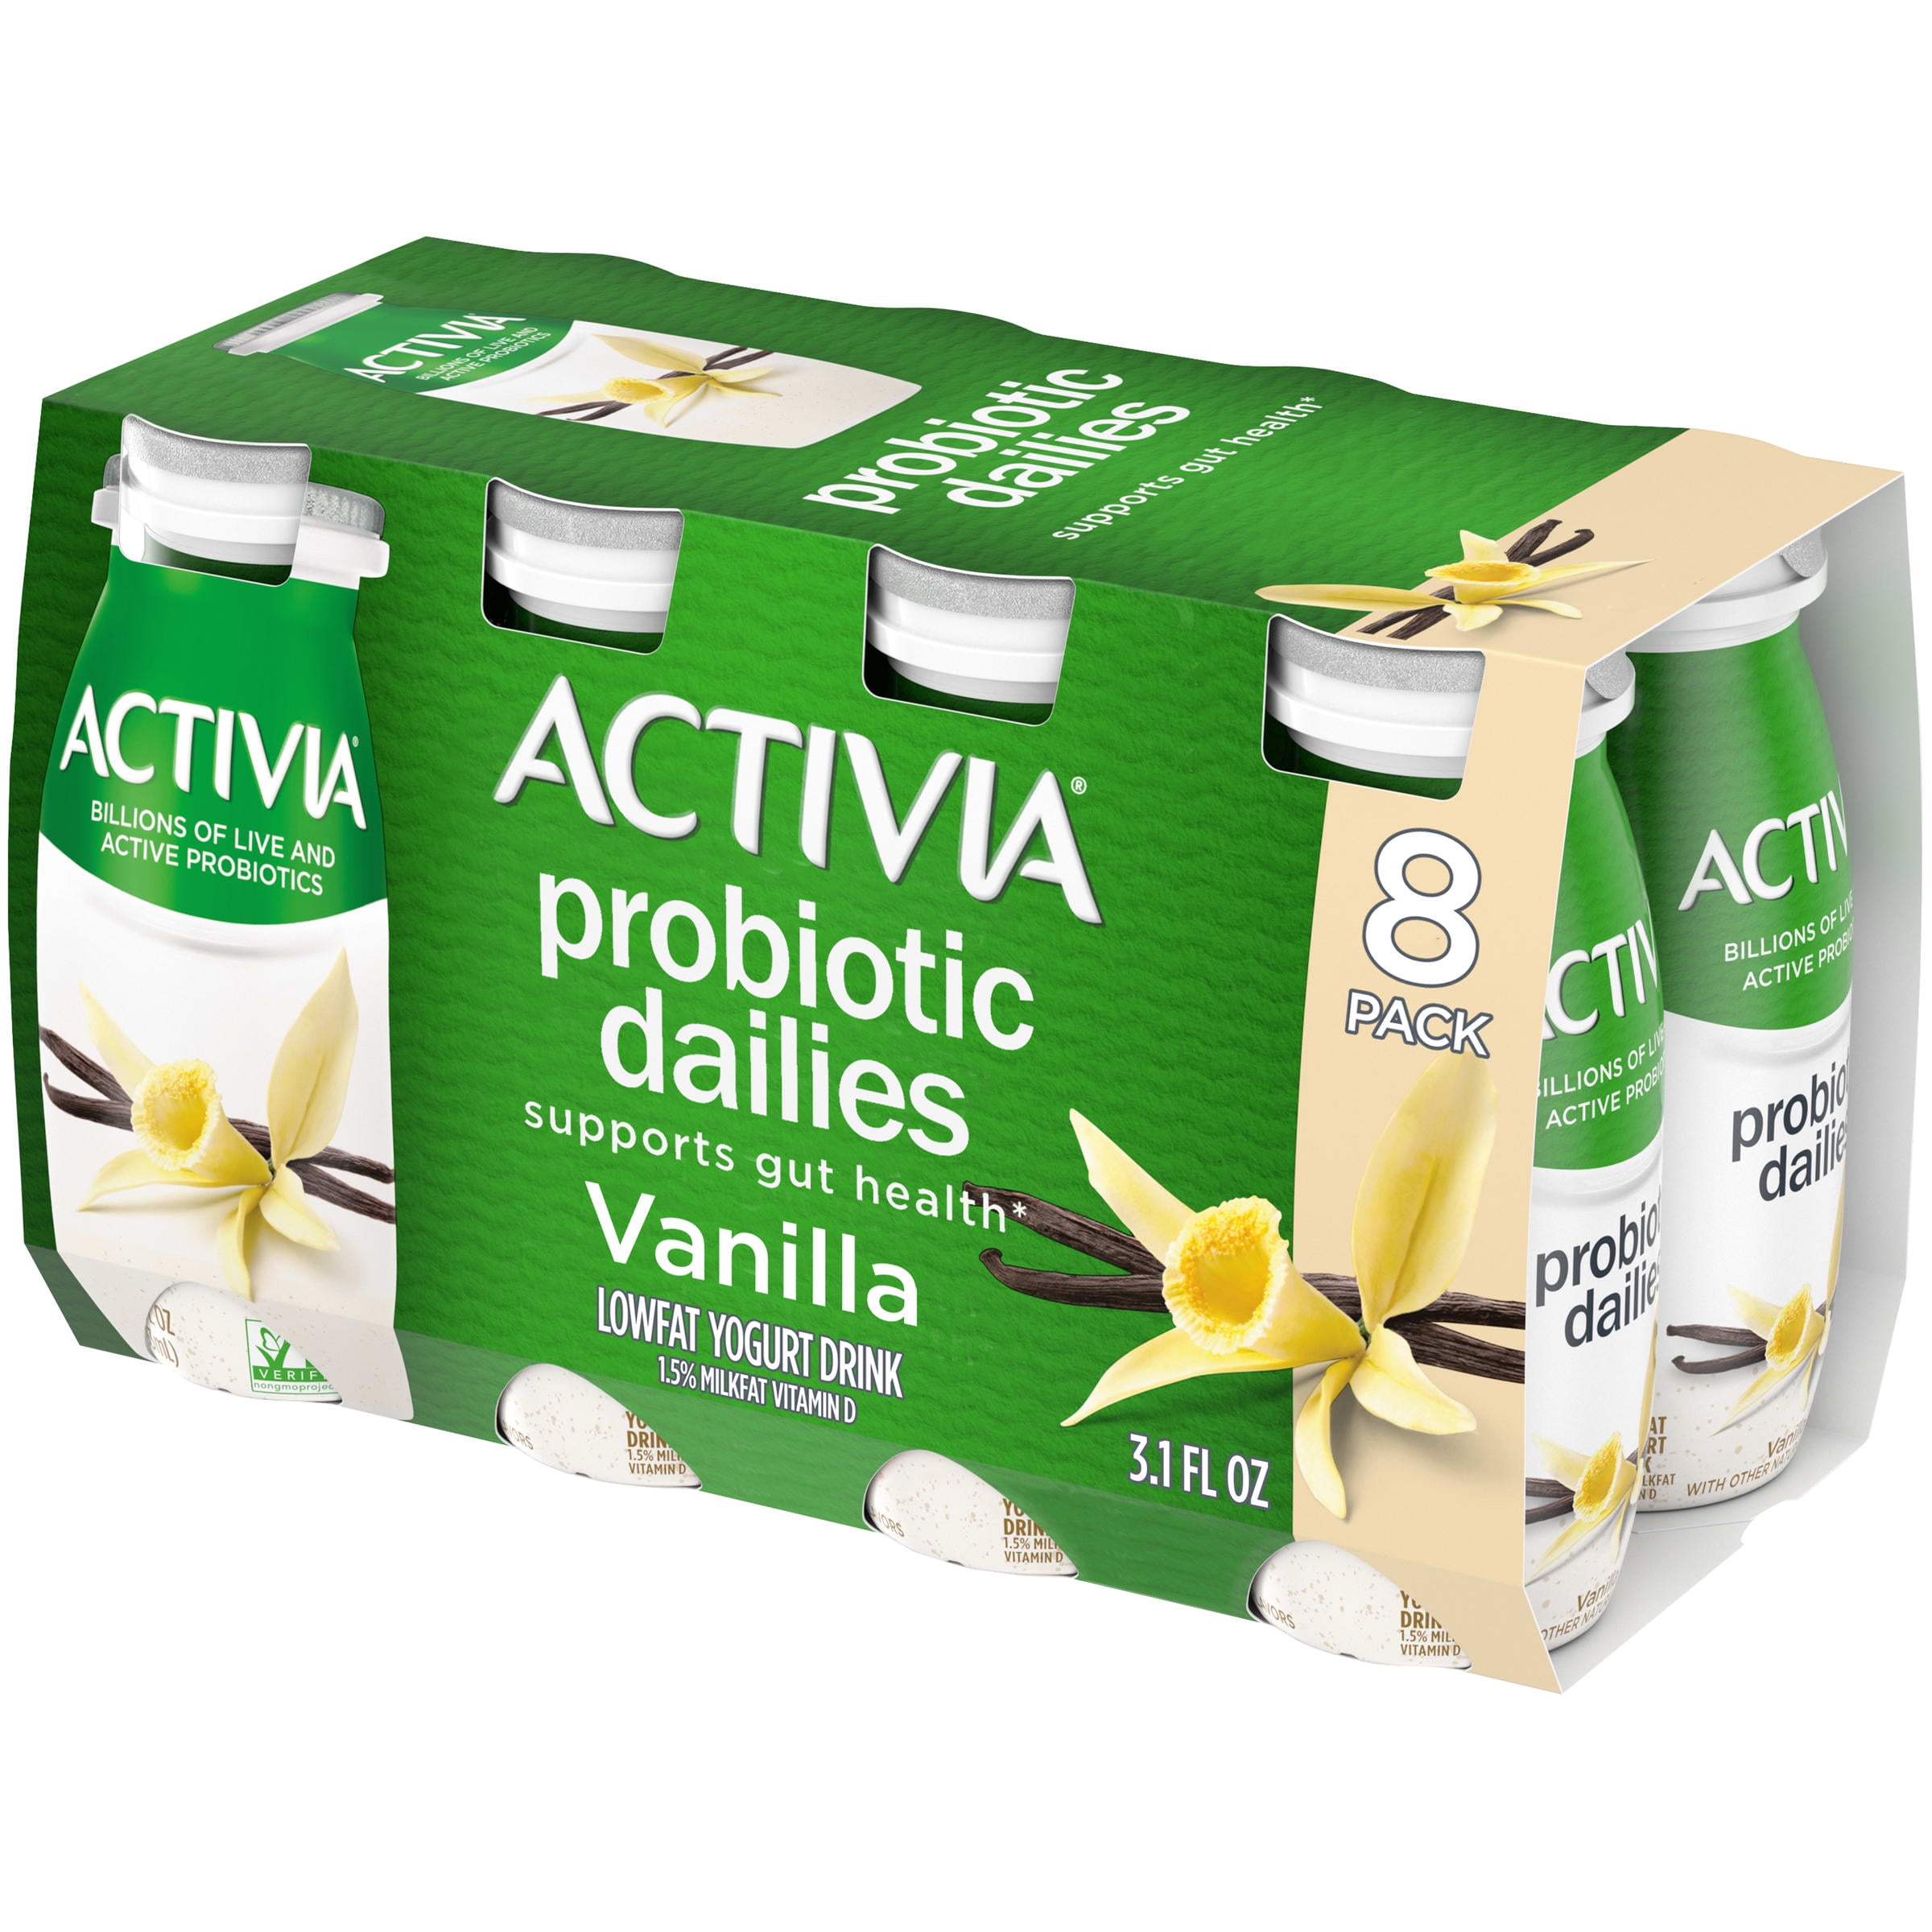 Activia Probiotic Variety Yogurt 24/Pack (902-00477)